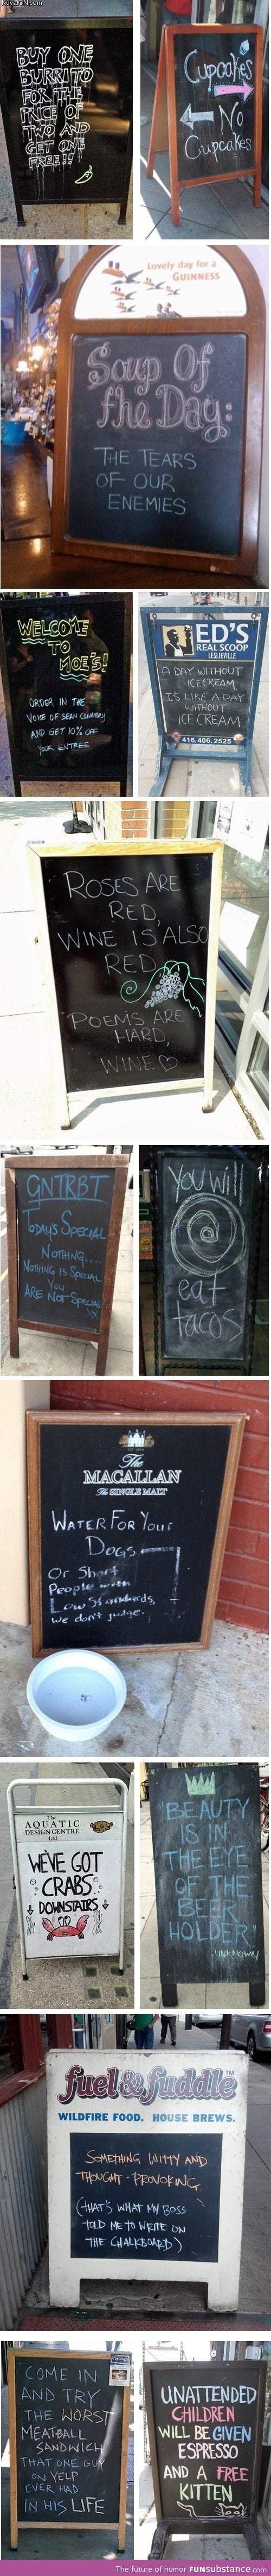 Sandwich signs